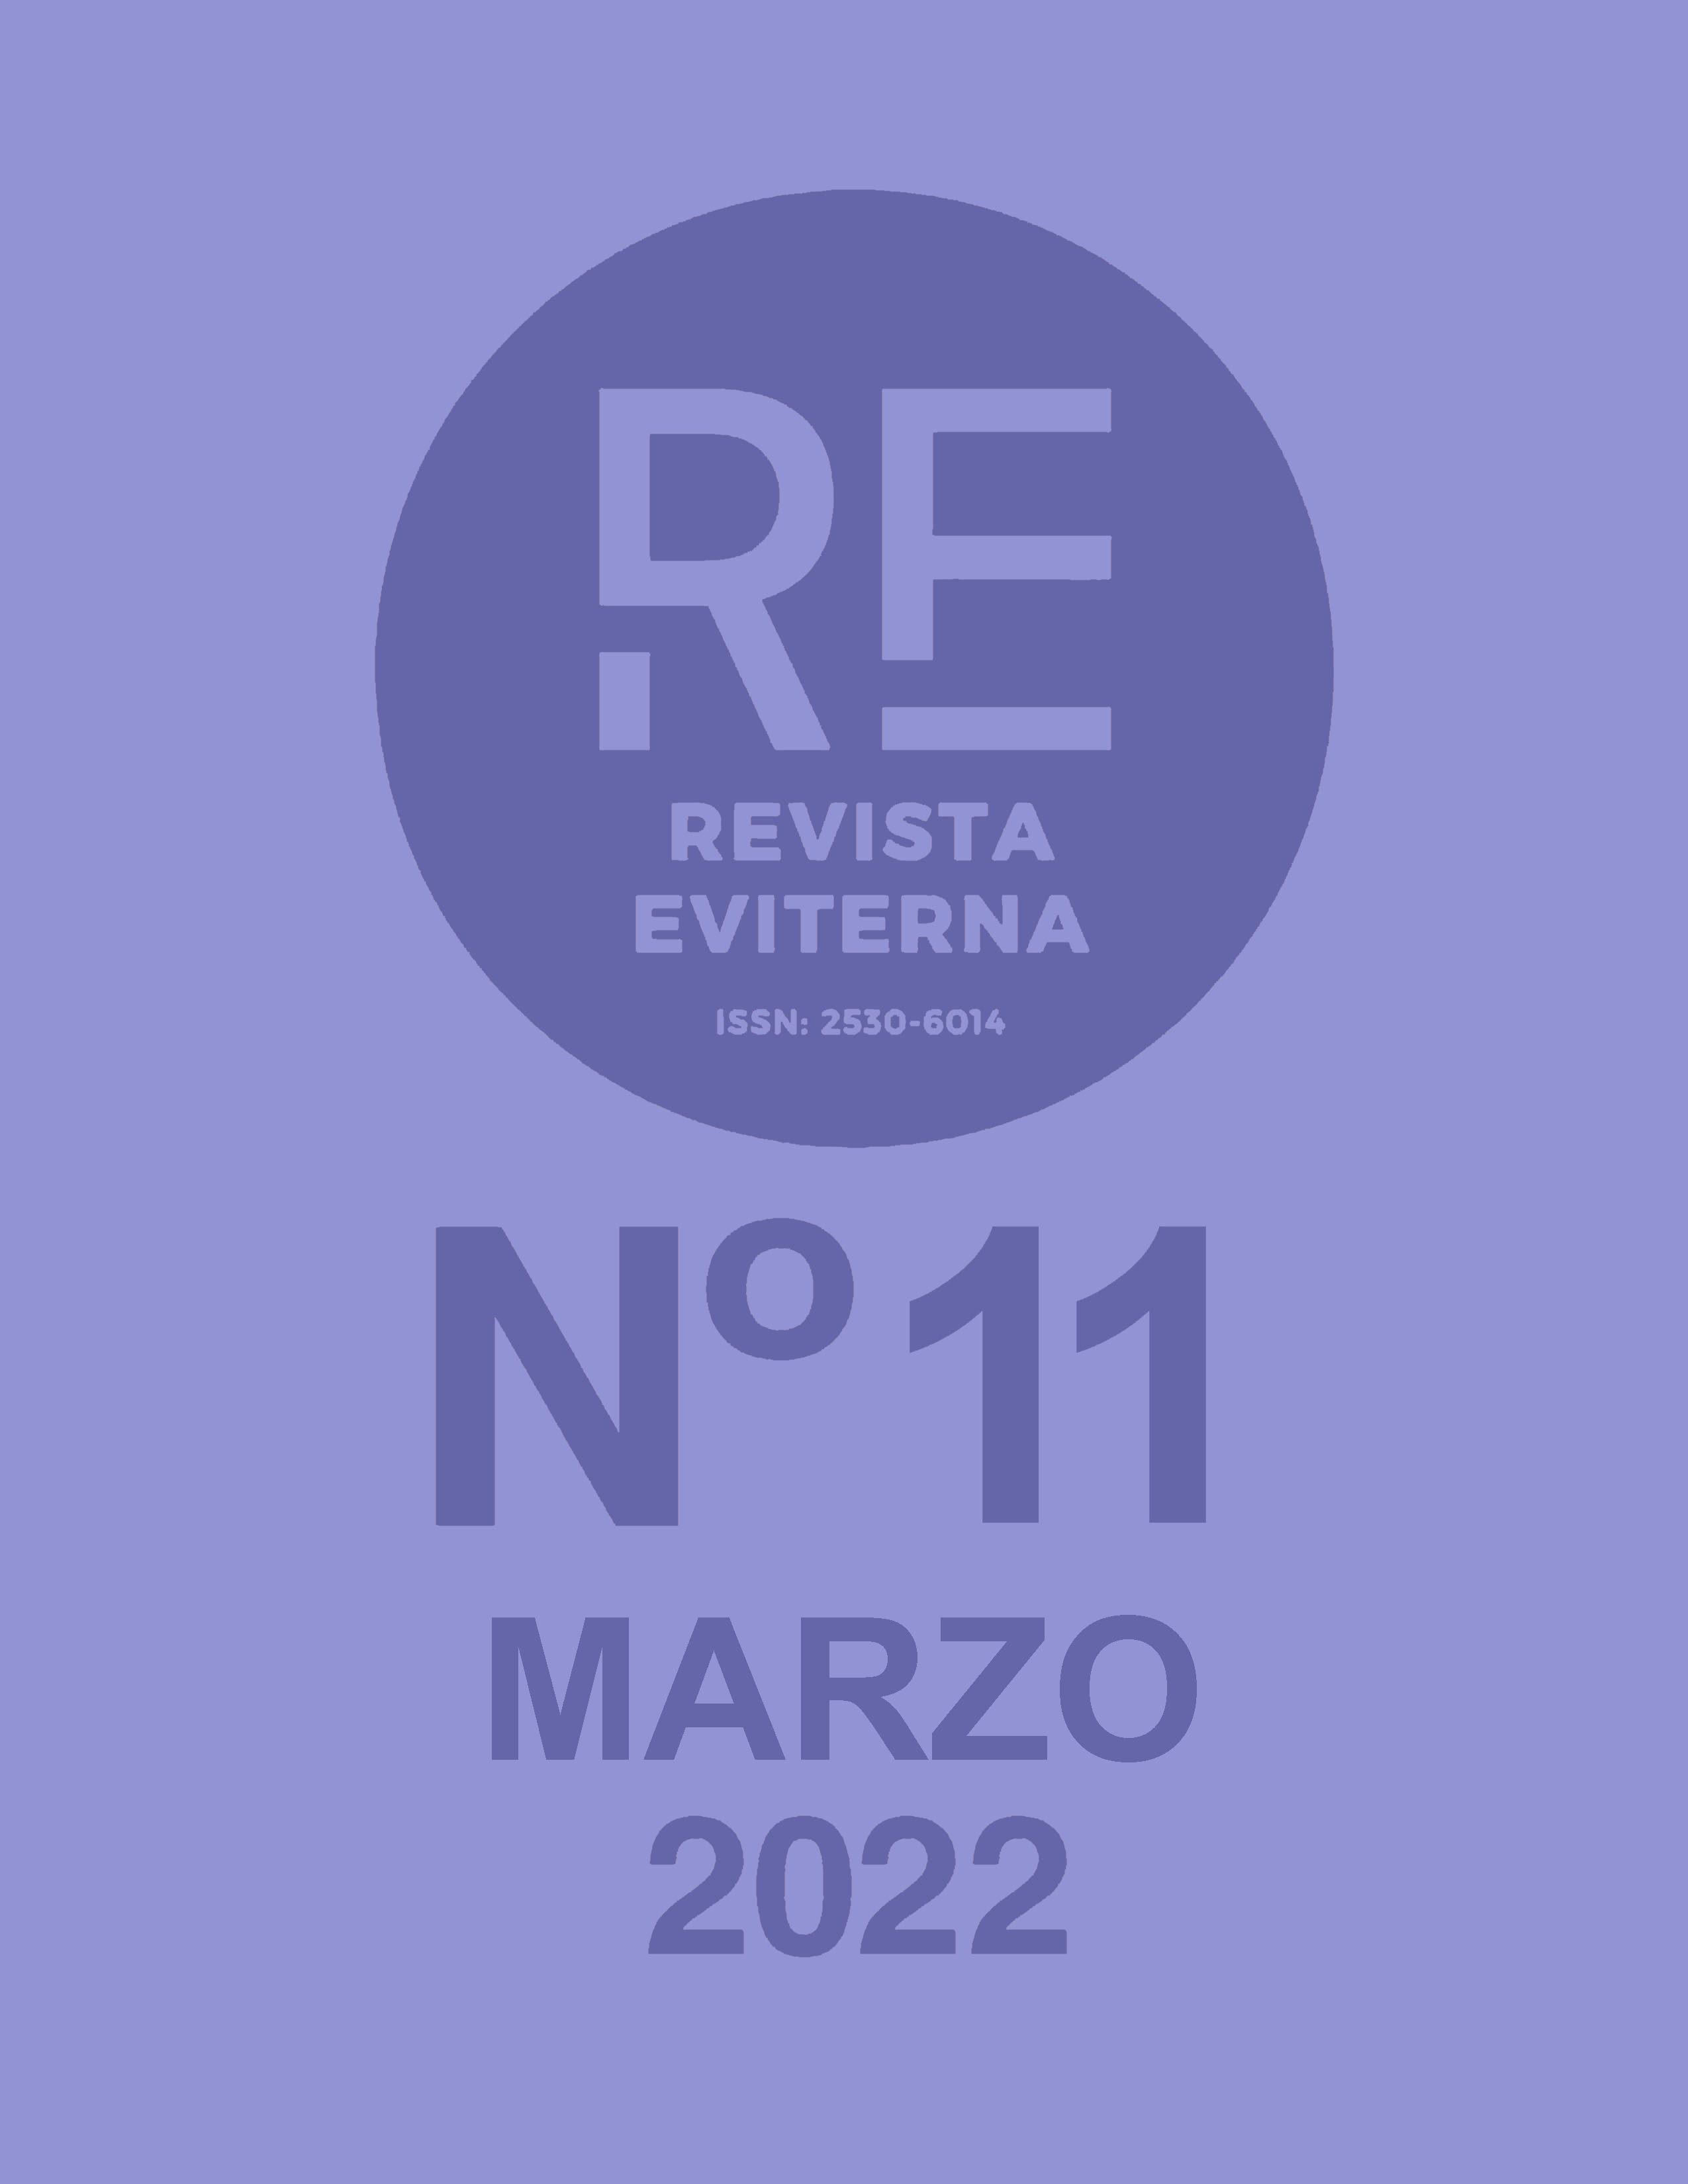 					View No. 11 (2022): Revista Eviterna Nº 11, march 2022
				